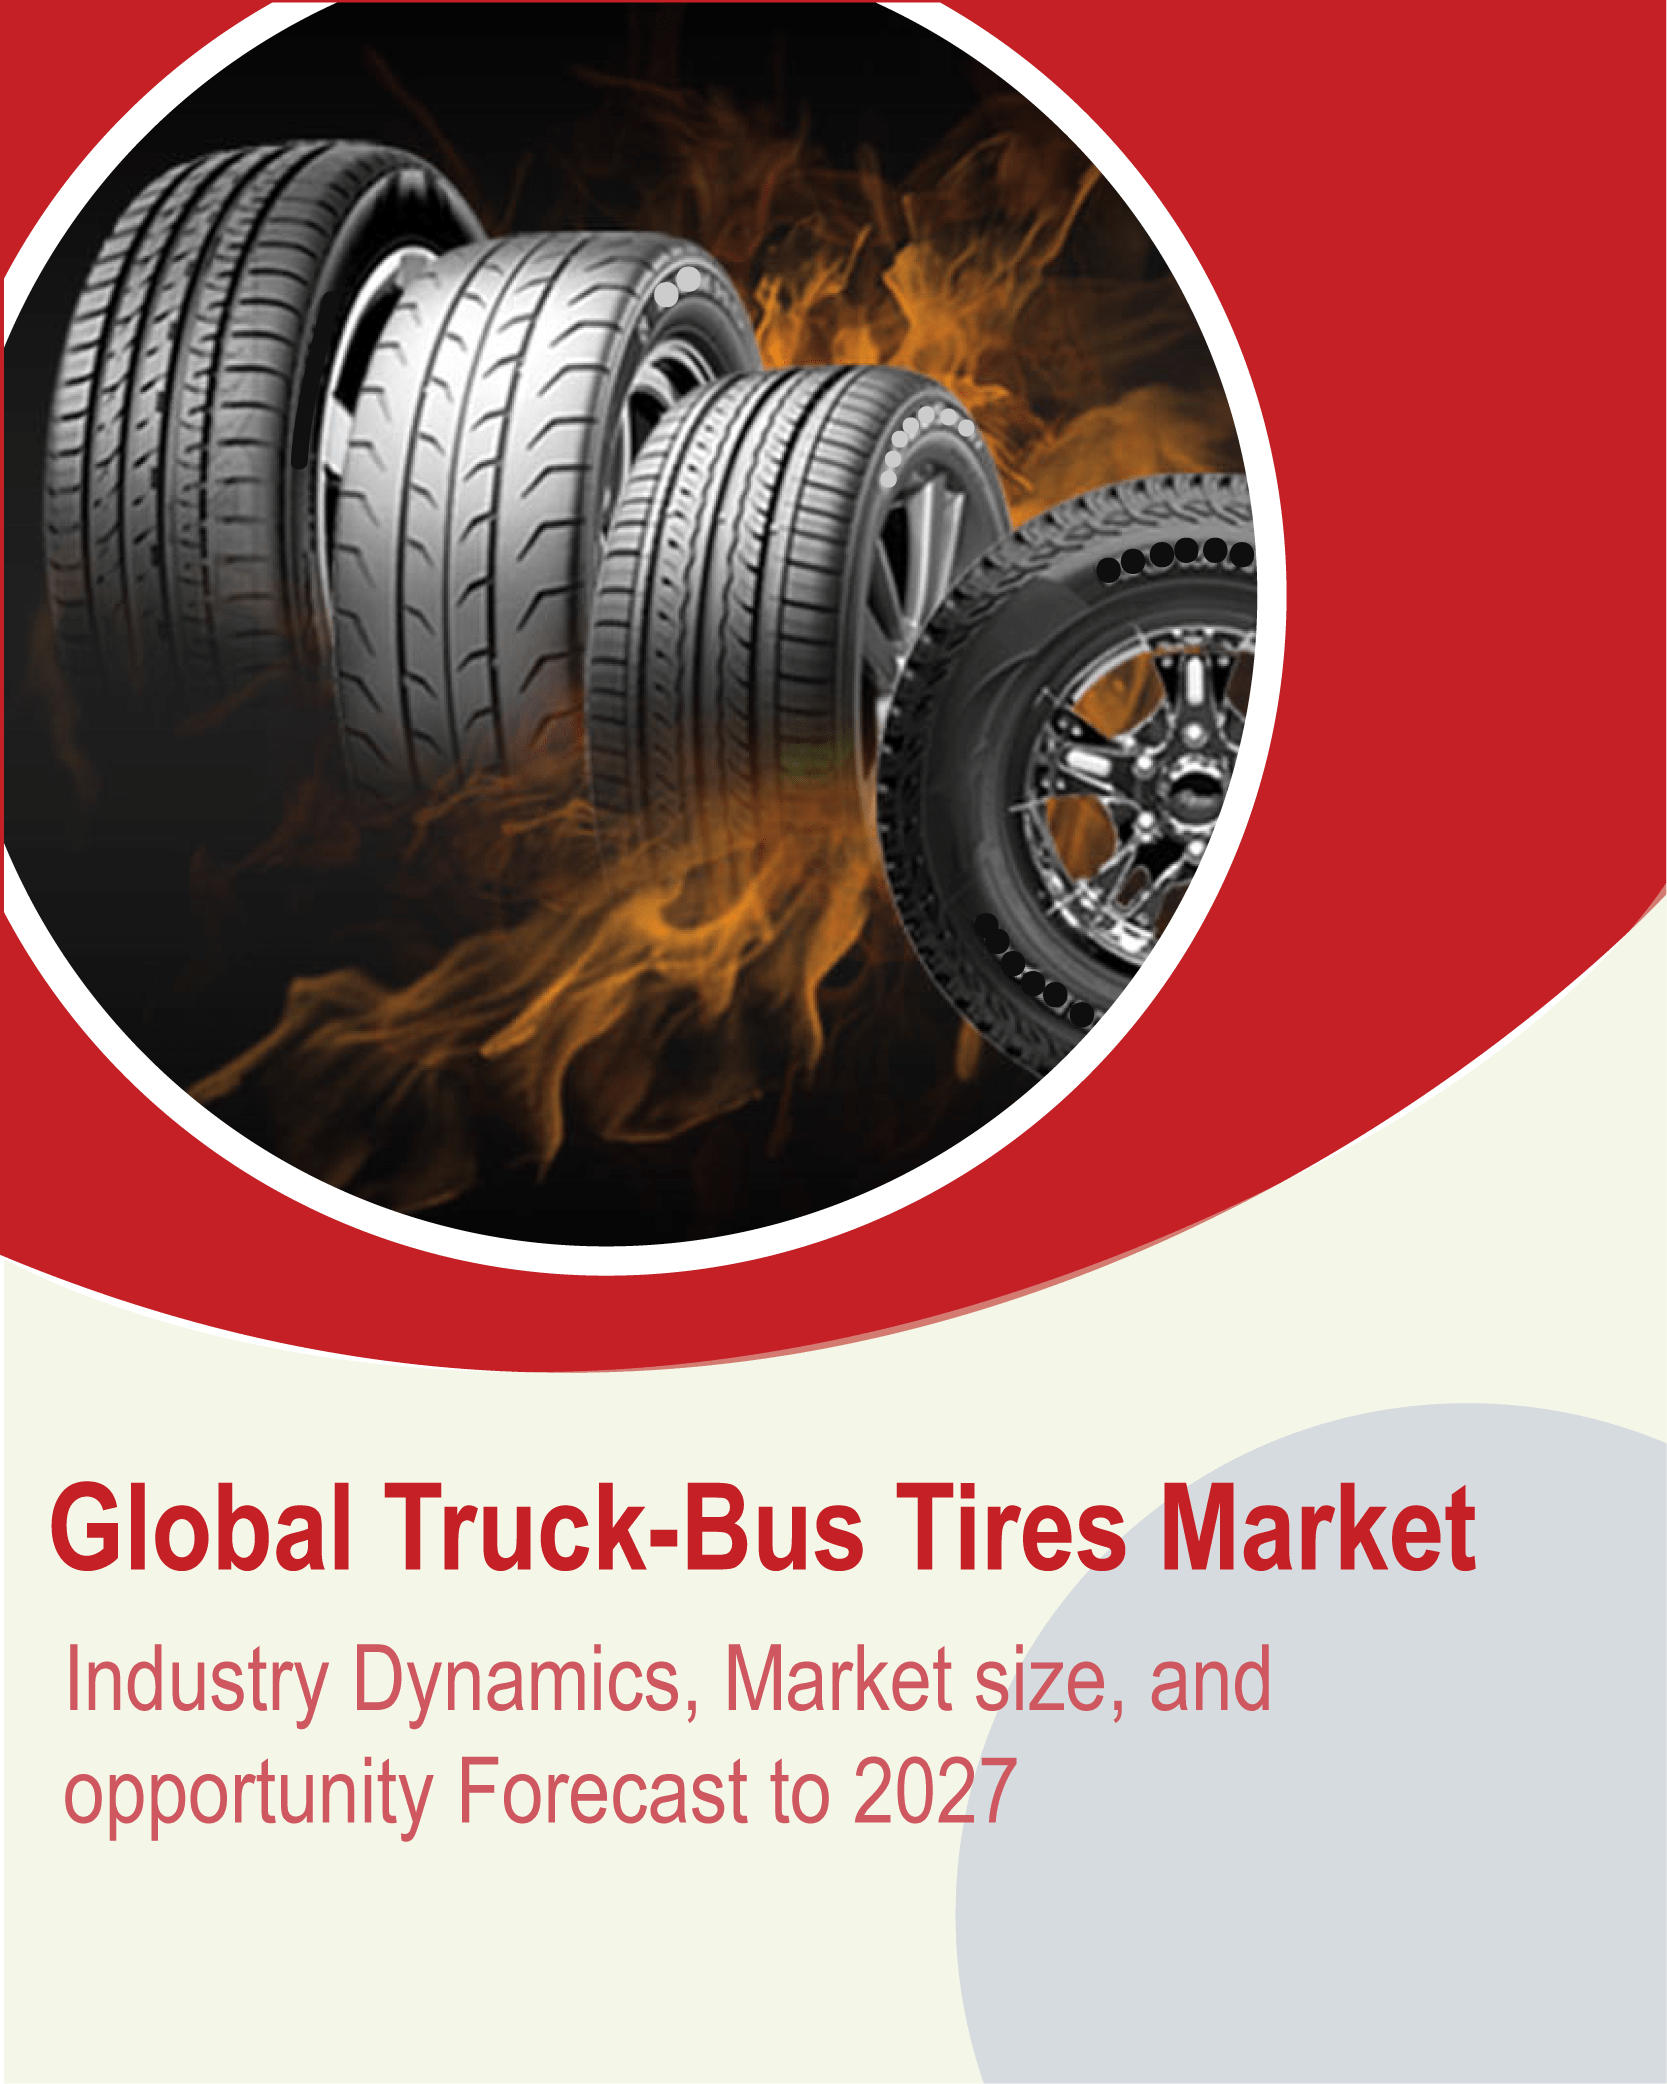 Truck-Bus Tires Market